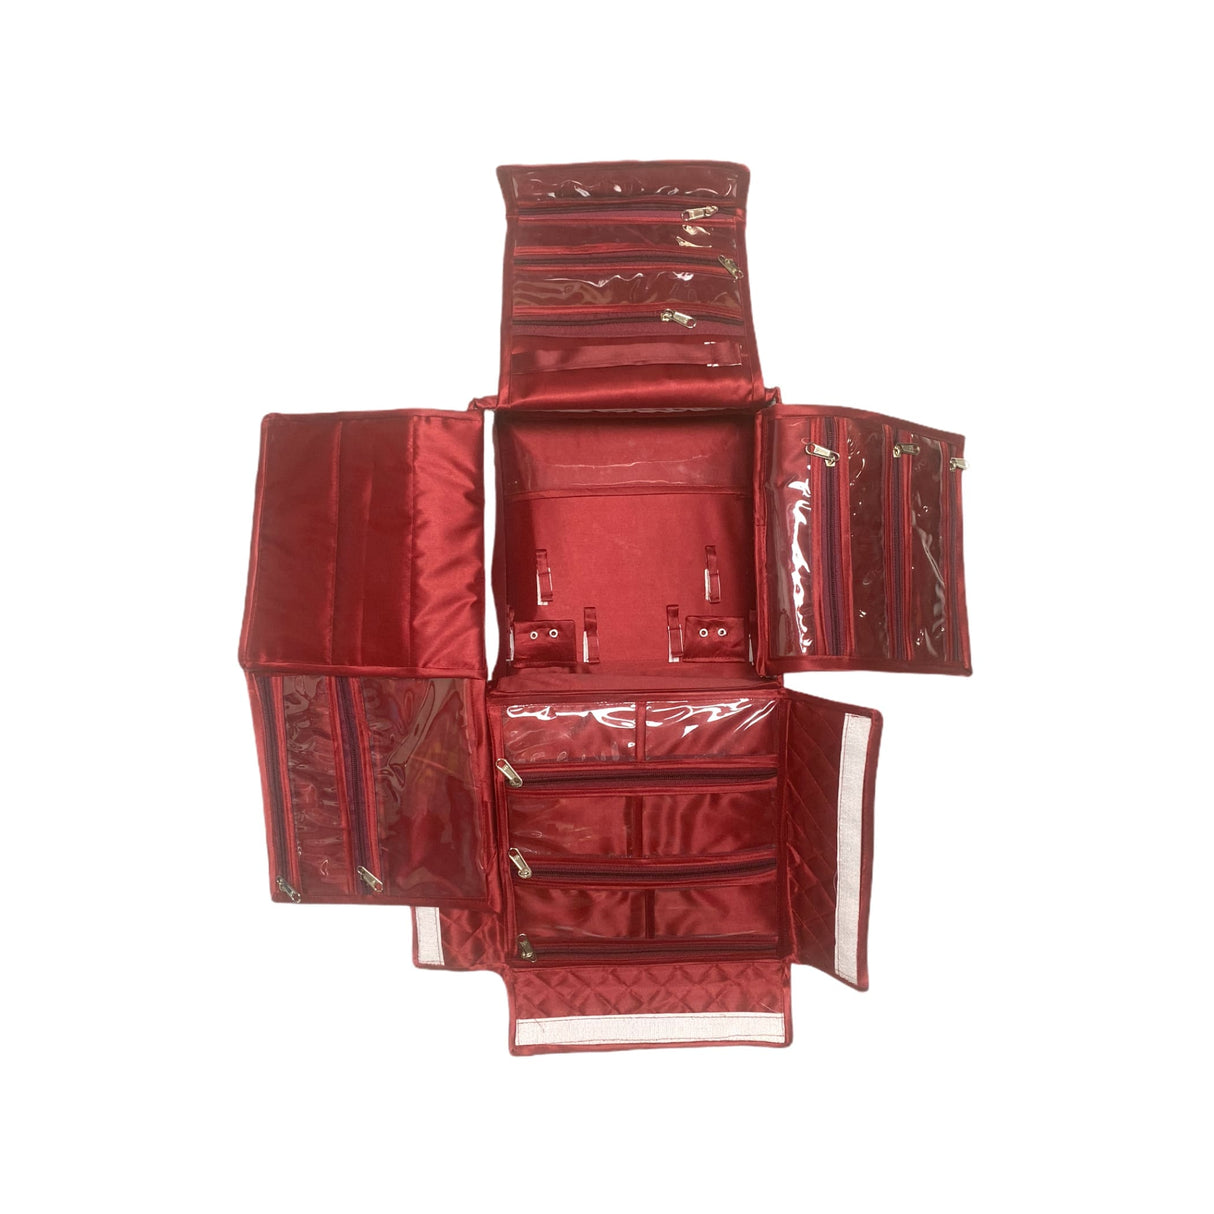 Handmade travel jewelry organizer bag cloth box foldable